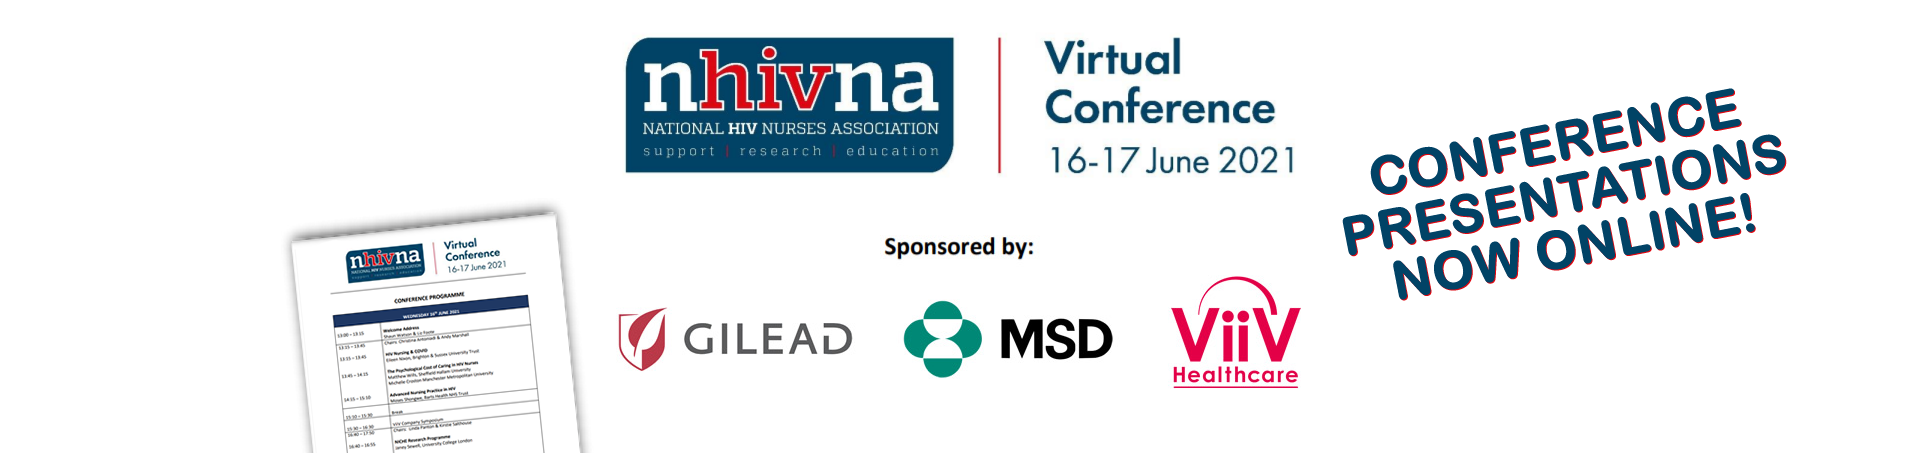 NHIVNA Virtual Conference 2021